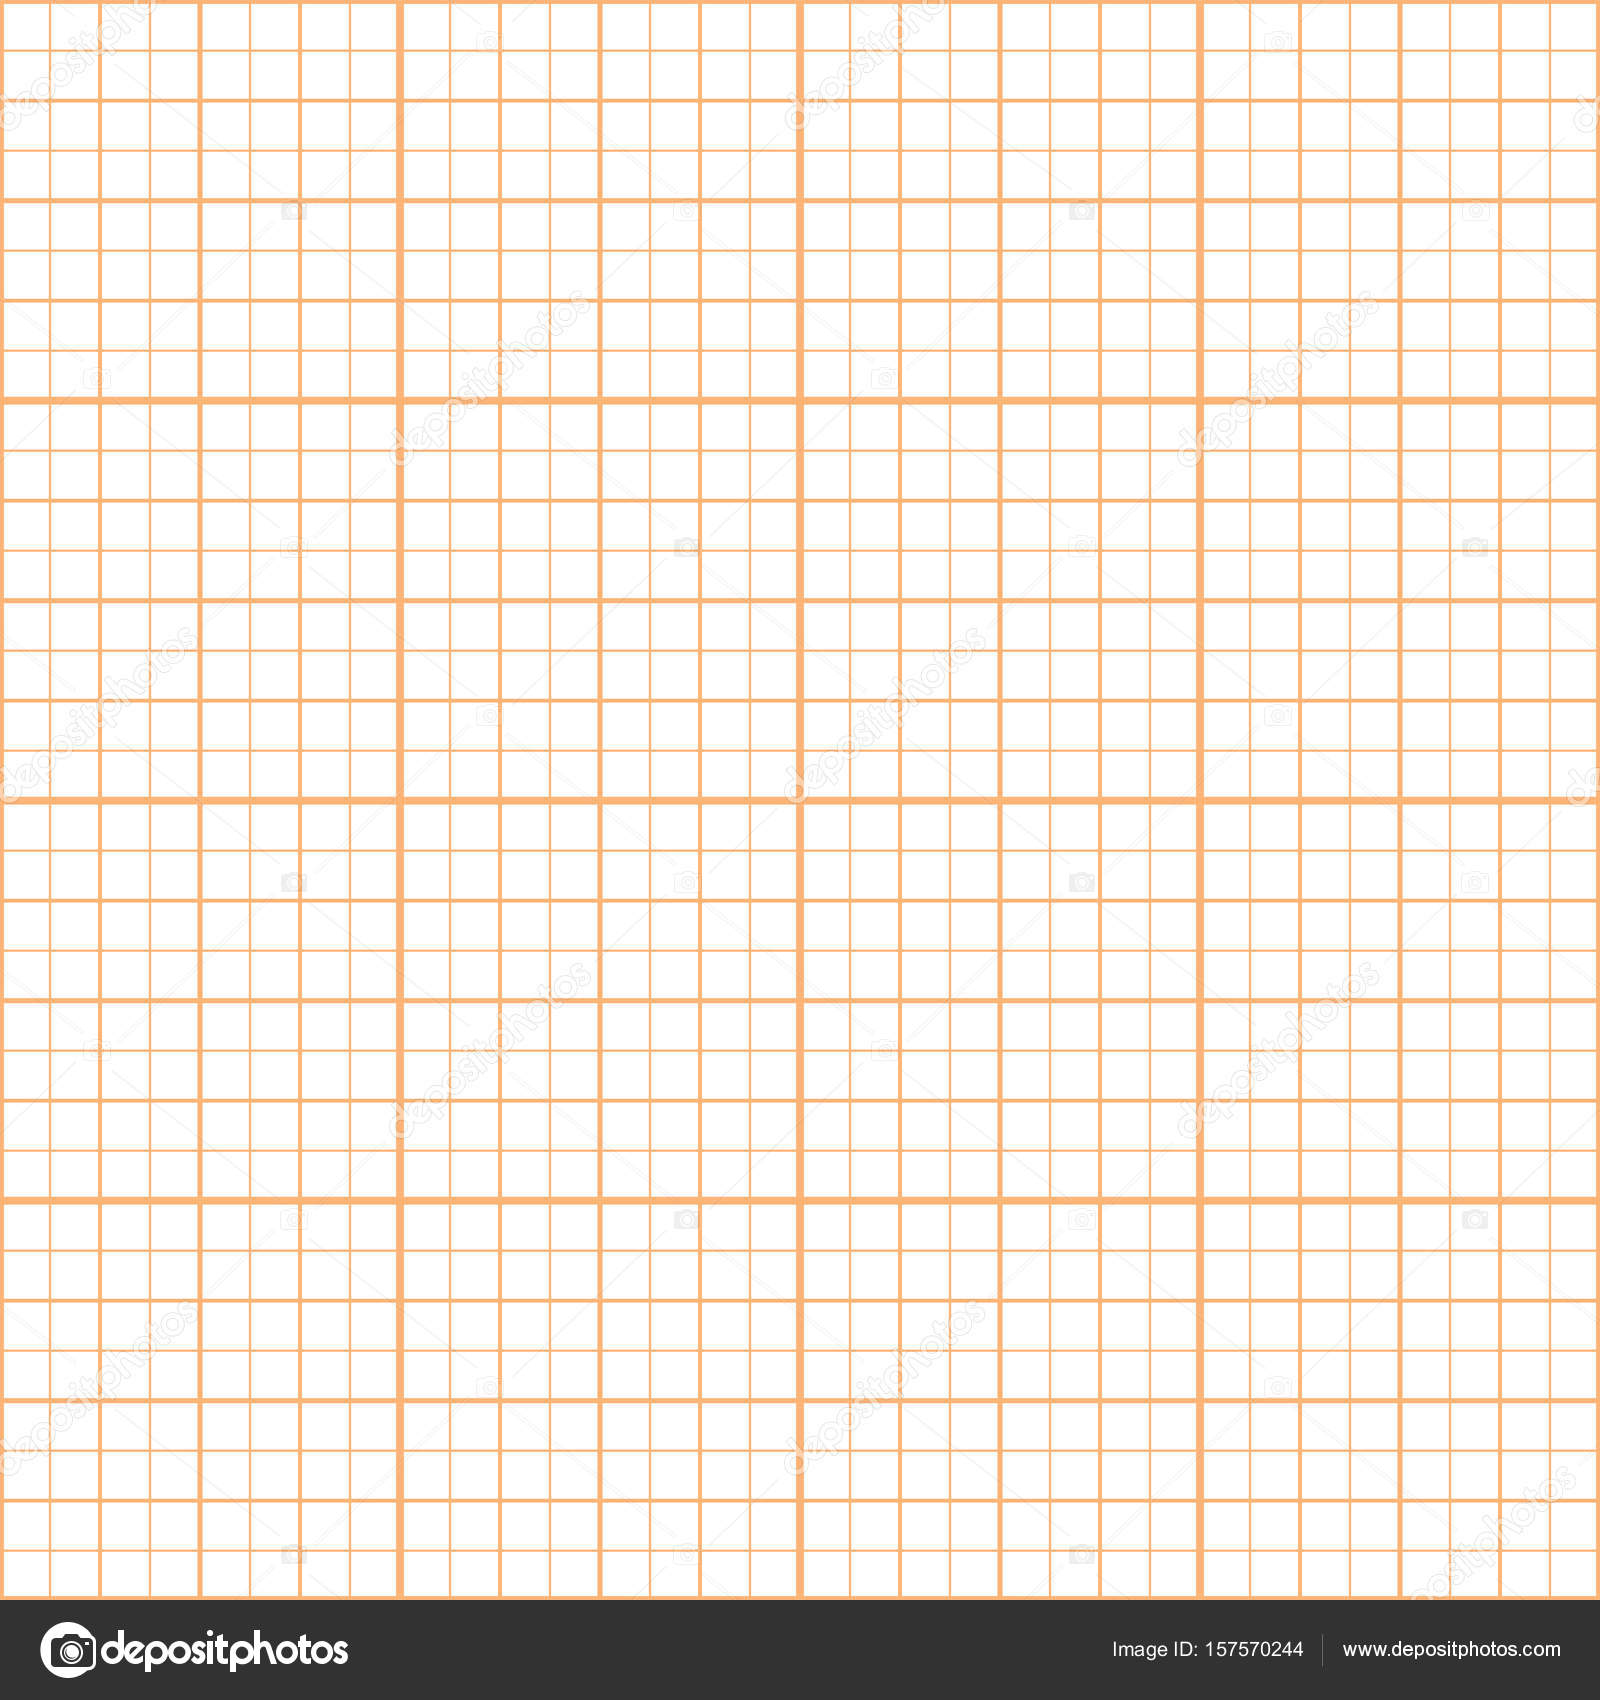 depositphotos_157570244 stock illustration vector orange inch graph paper